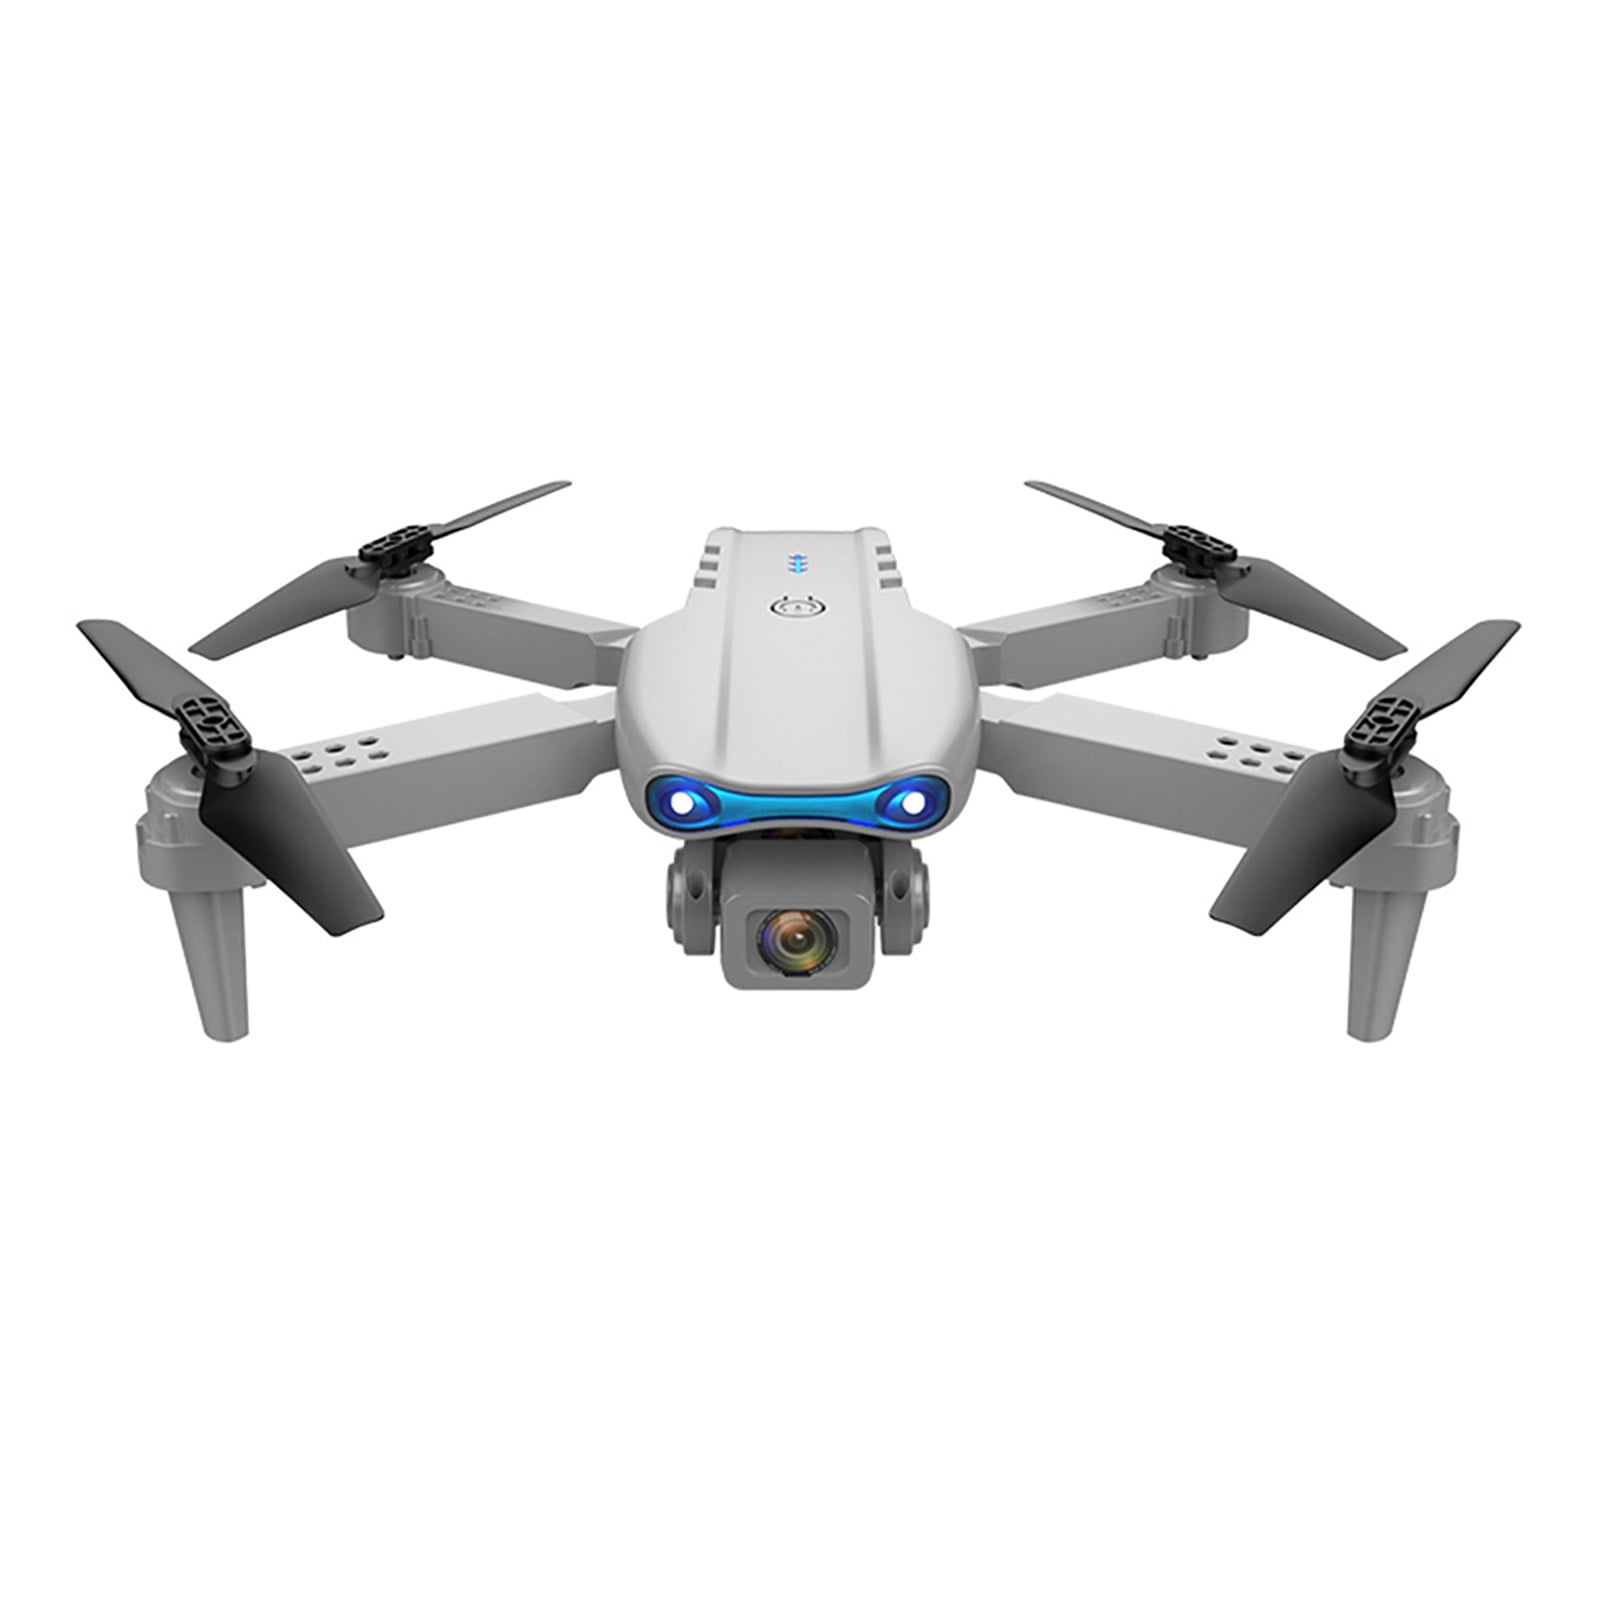 Achetez E99 Pro2 Dual 4K Camera FPV Drone Professional Gesture